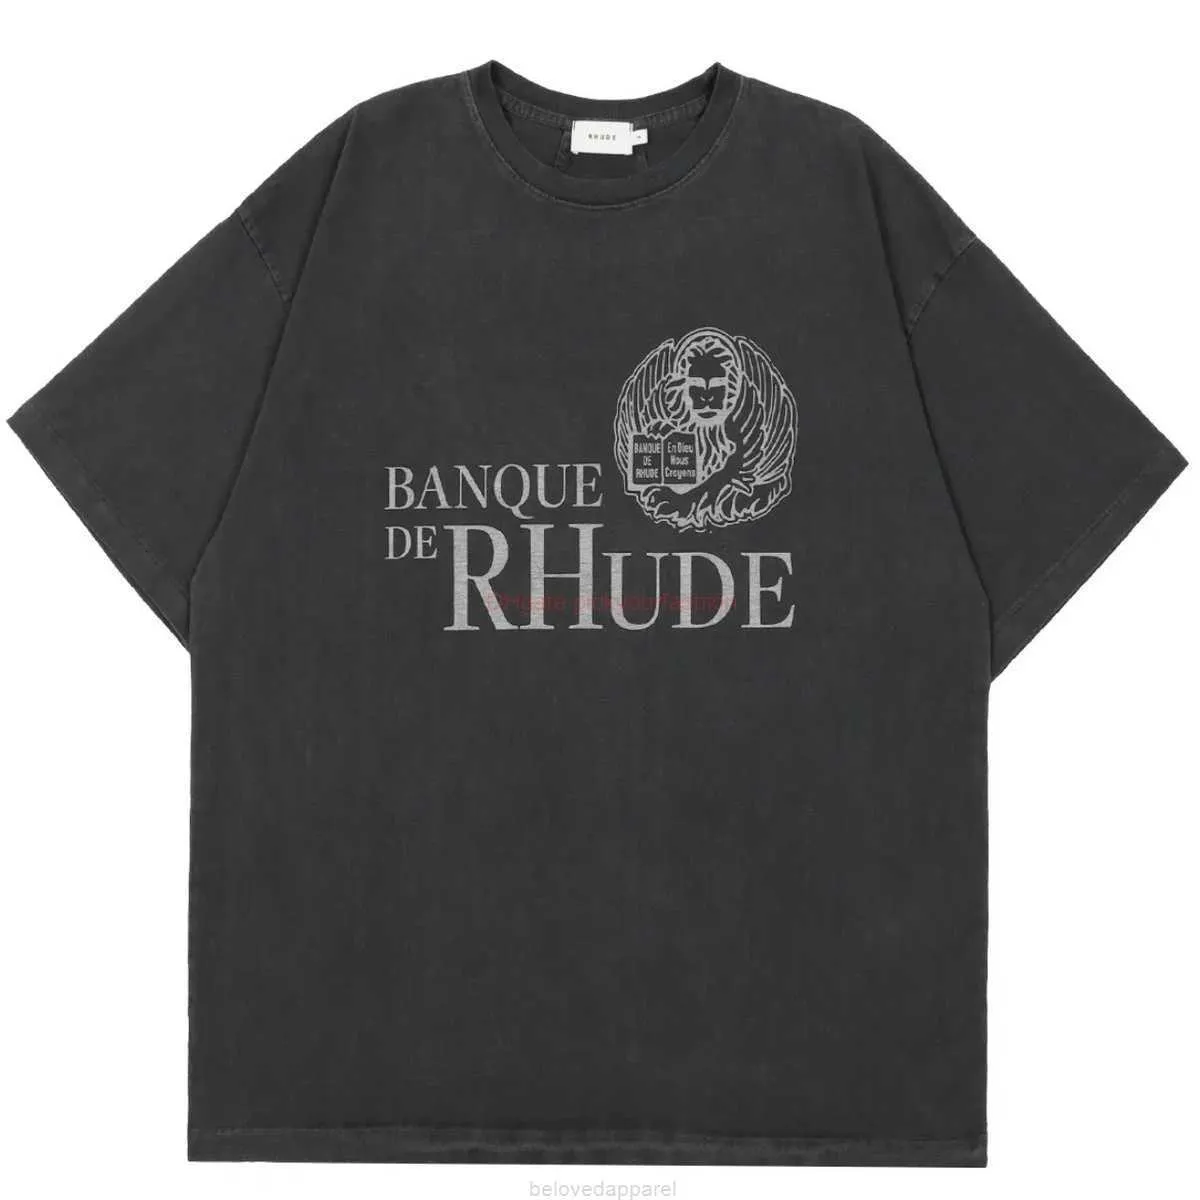 Designer de roupas de moda camisetas H8009 # Rhude Bank Slogan manga curta camiseta algodão streetwear tops casual sportswear rock hip hop para venda nwiq